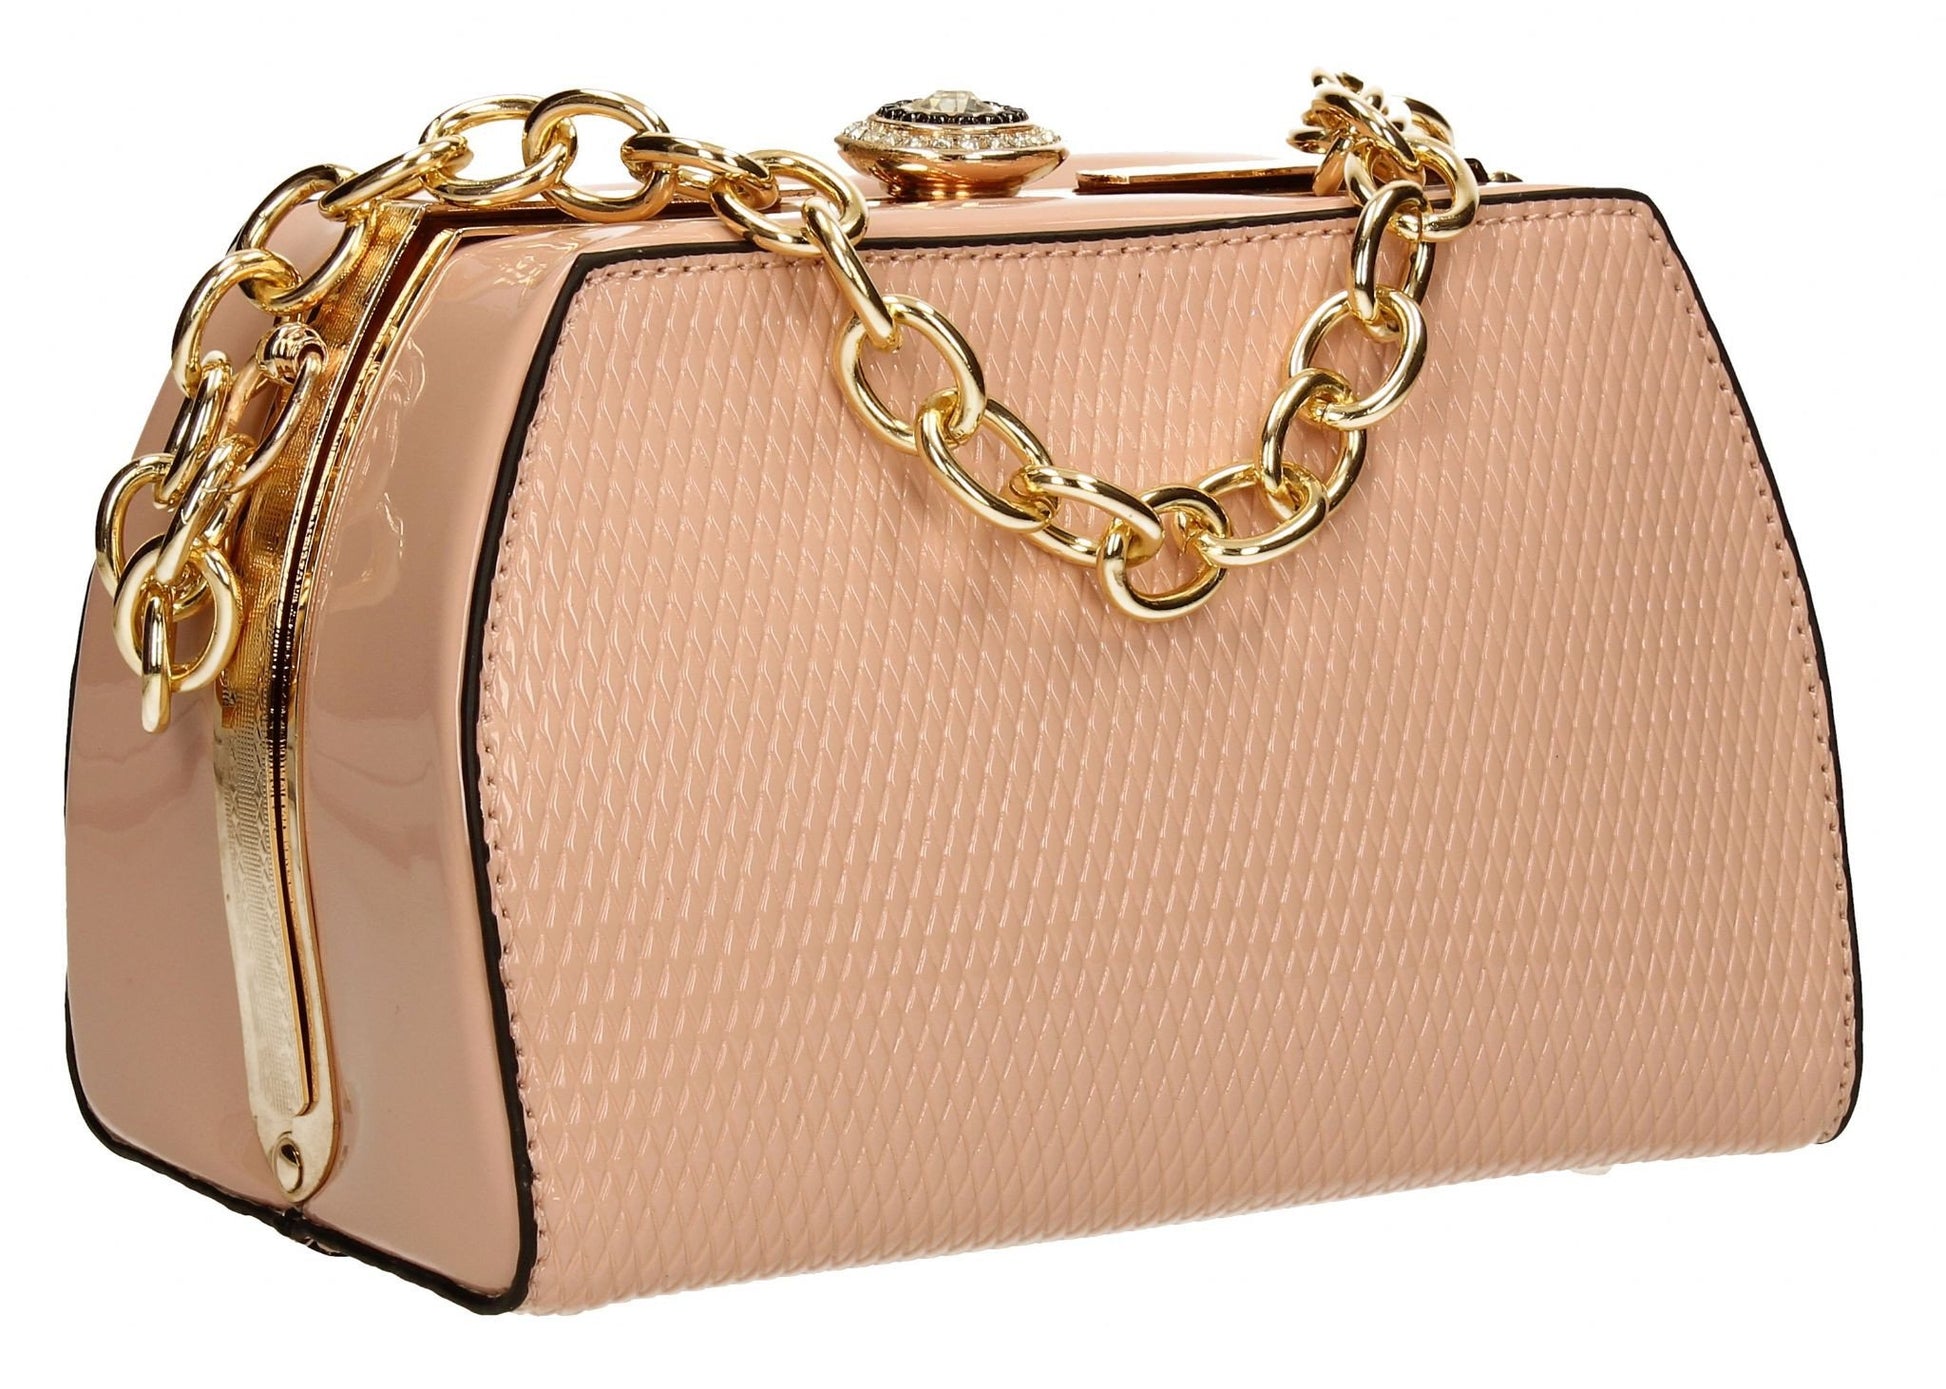 SWANKYSWANS Jayne Patent Frame Clutch Bag Pink Cute Cheap Clutch Bag For Weddings School and Work